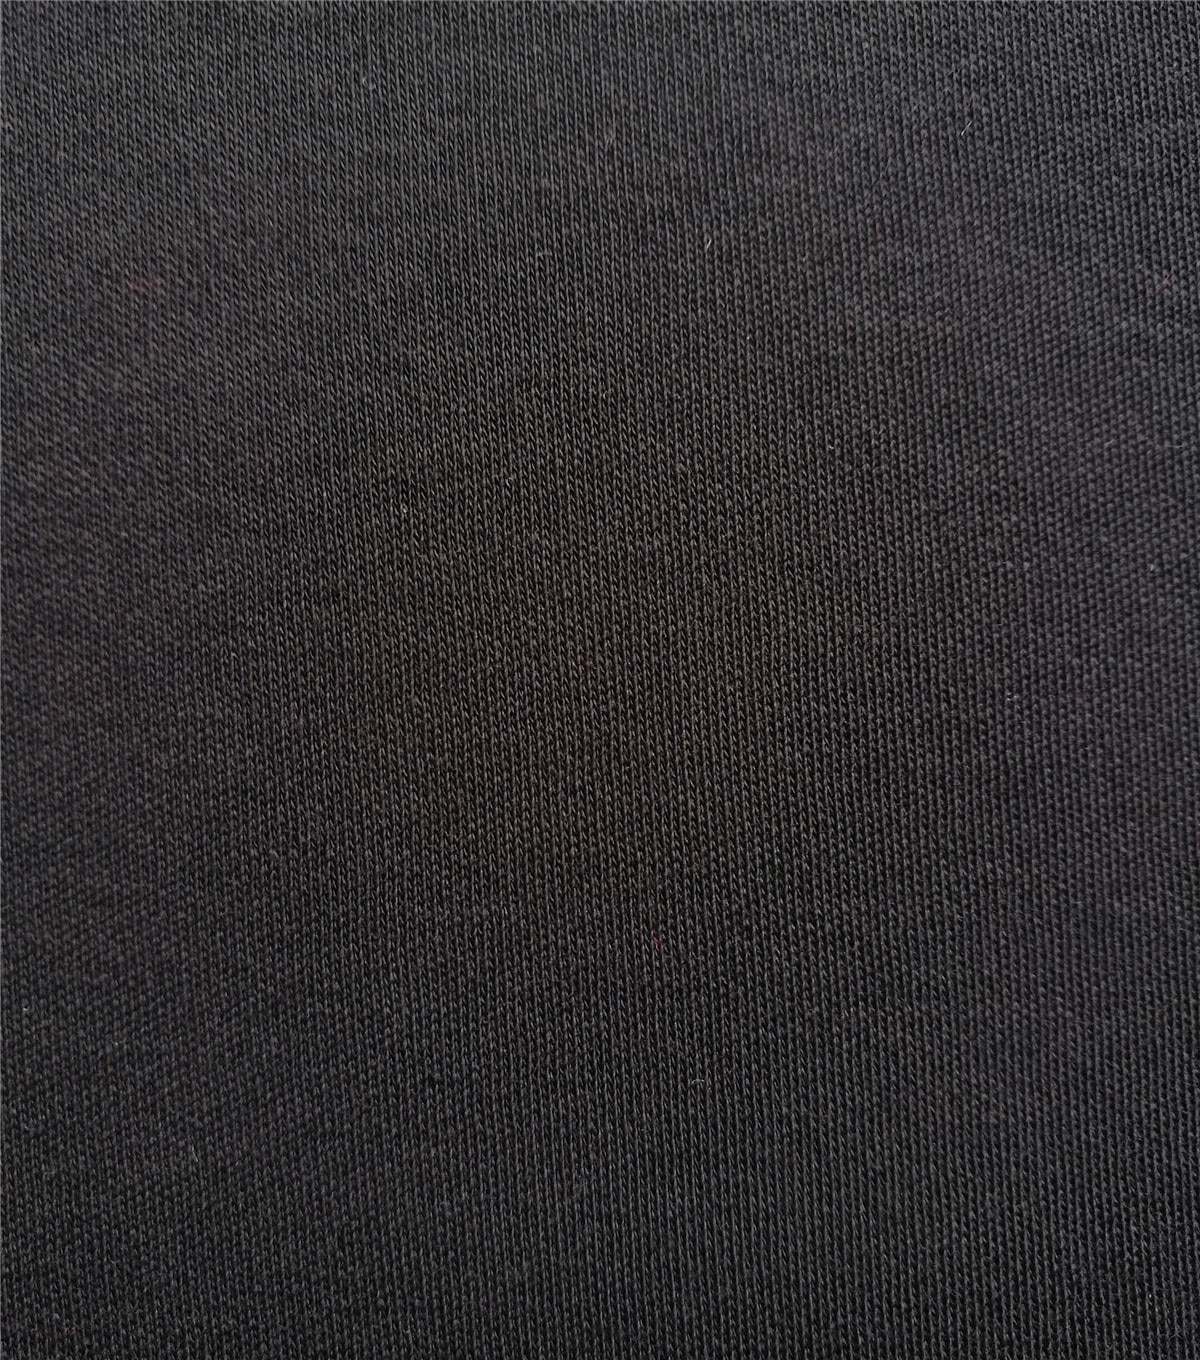 Knit Solids Pima Cotton Spandex Fabric-Black | JOANN